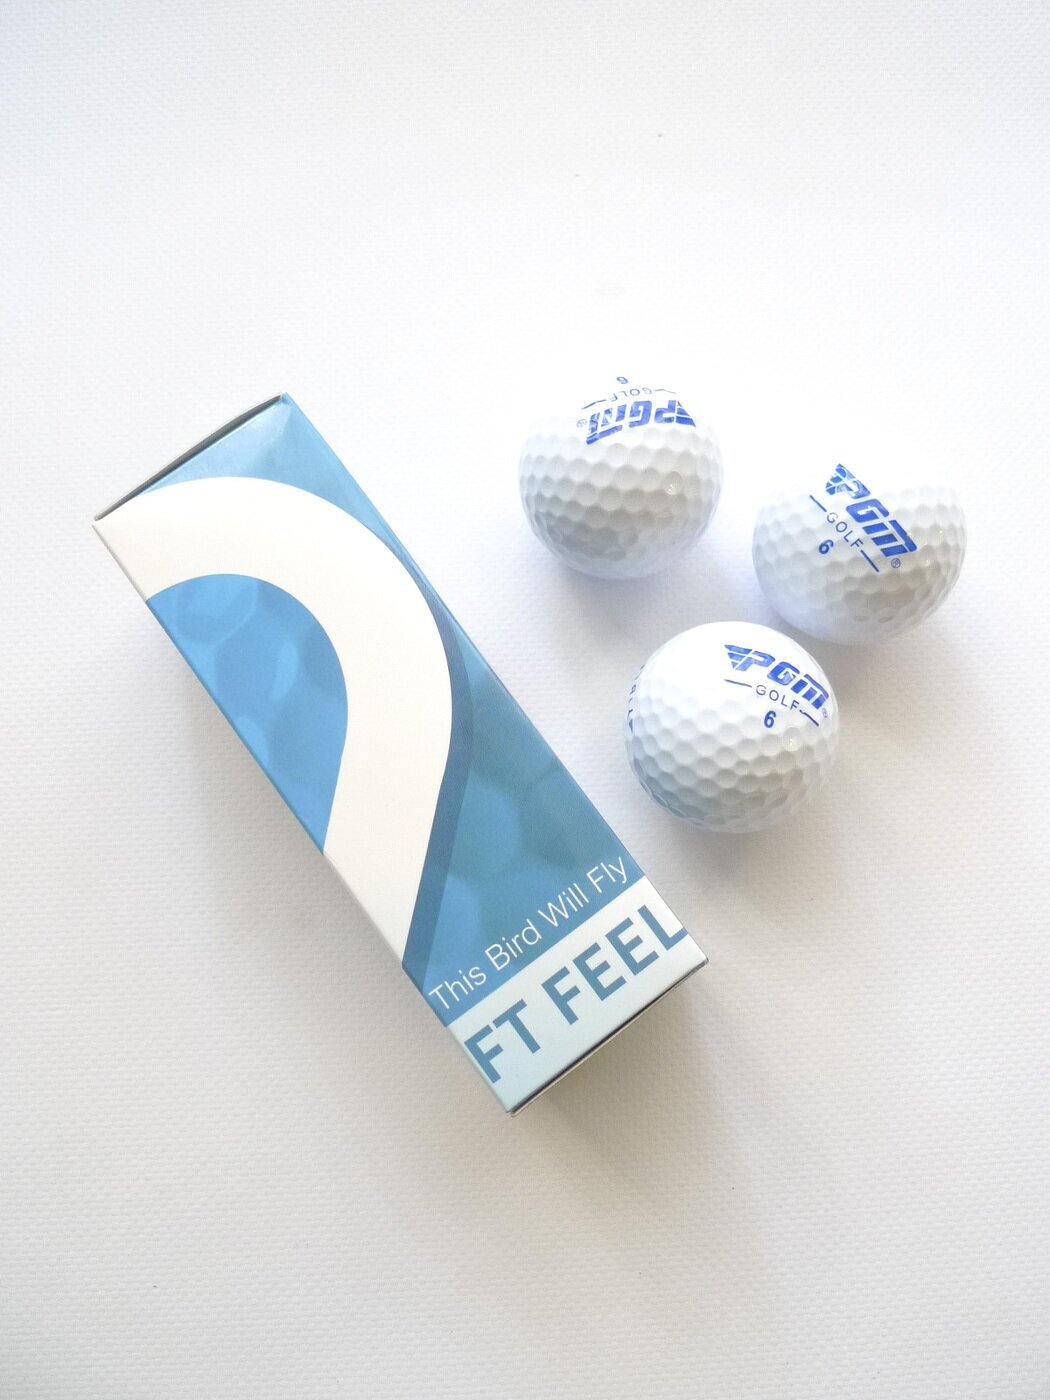 Мячи для гольфа PGM Soft Feel (3 мяча) - фотография № 1